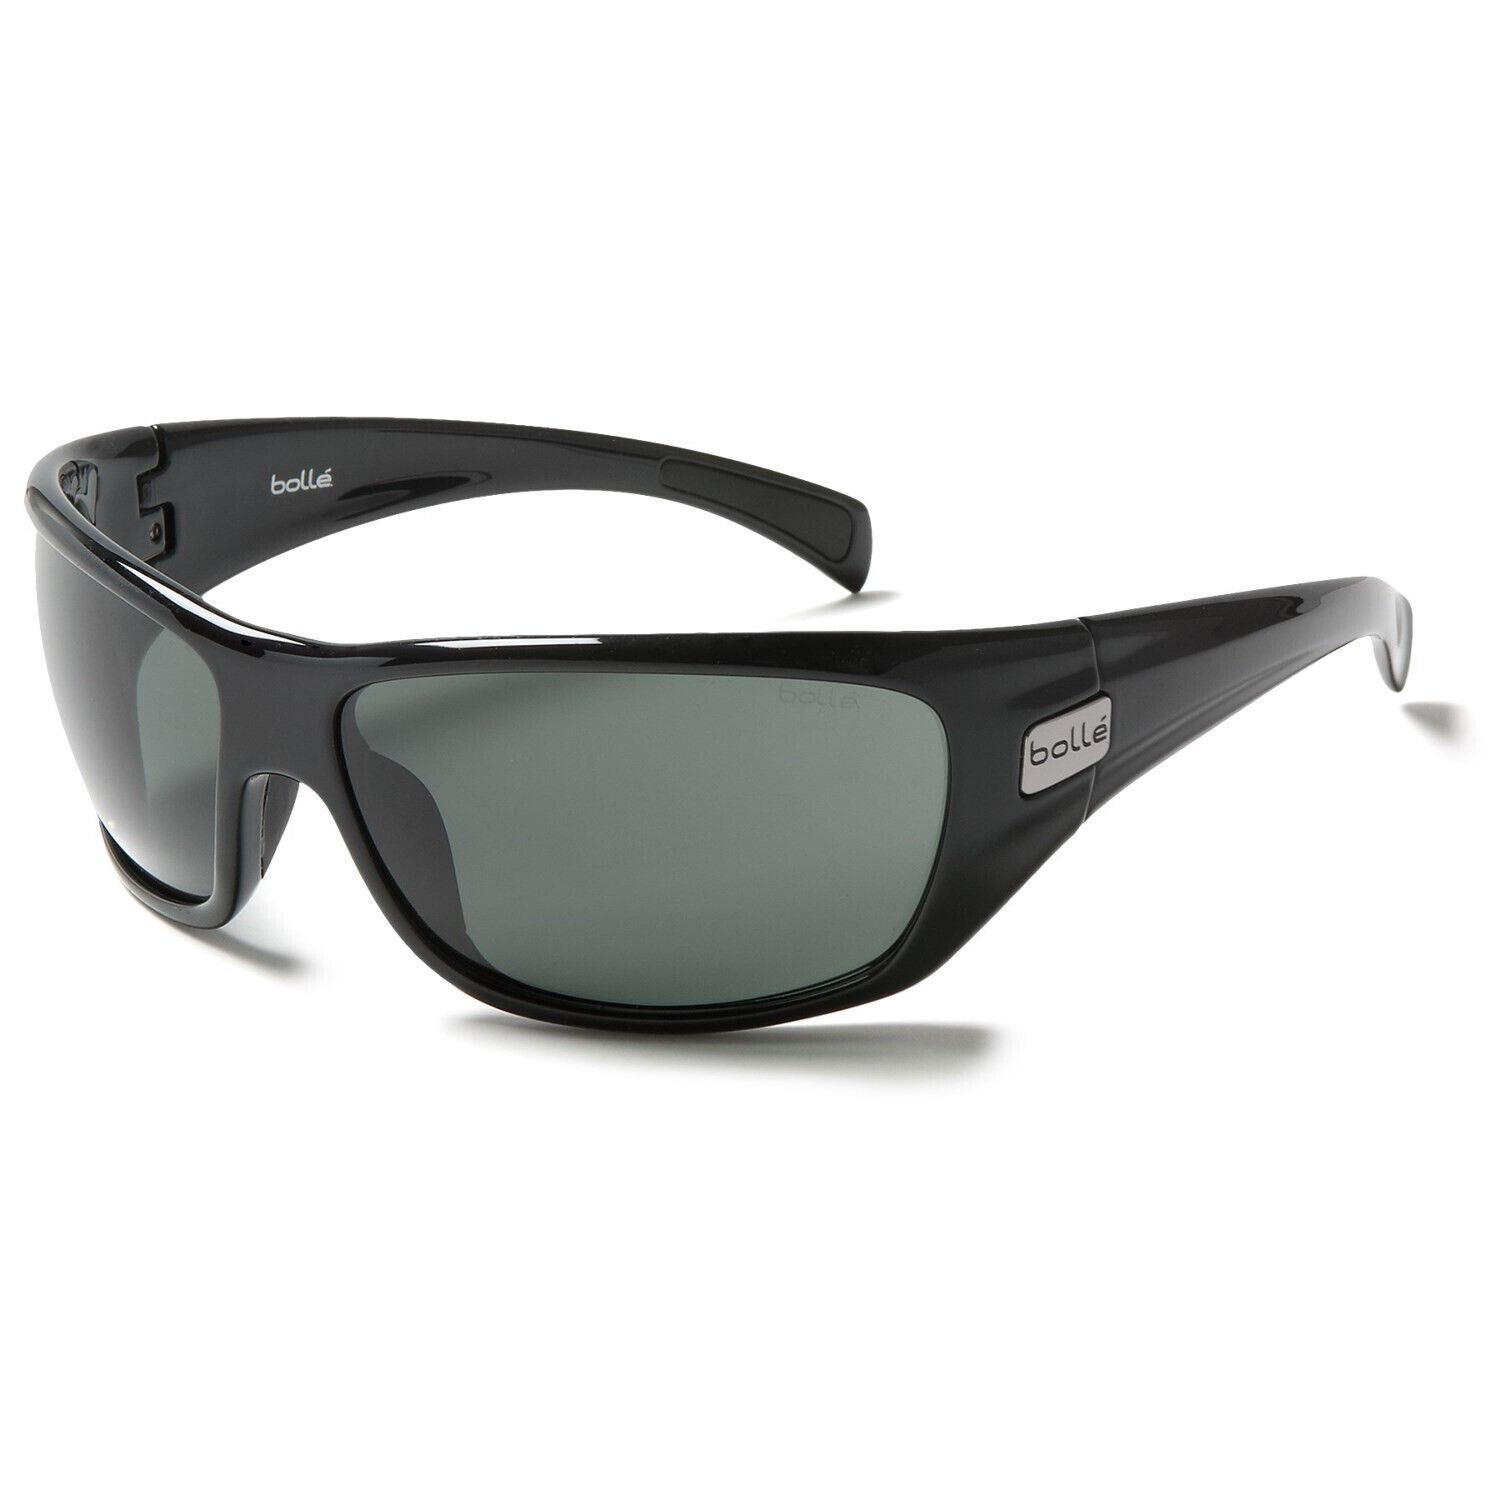 Bolle Cobra Sunglasses | 063071887222 - Bolle sunglasses Cobra - Black ...